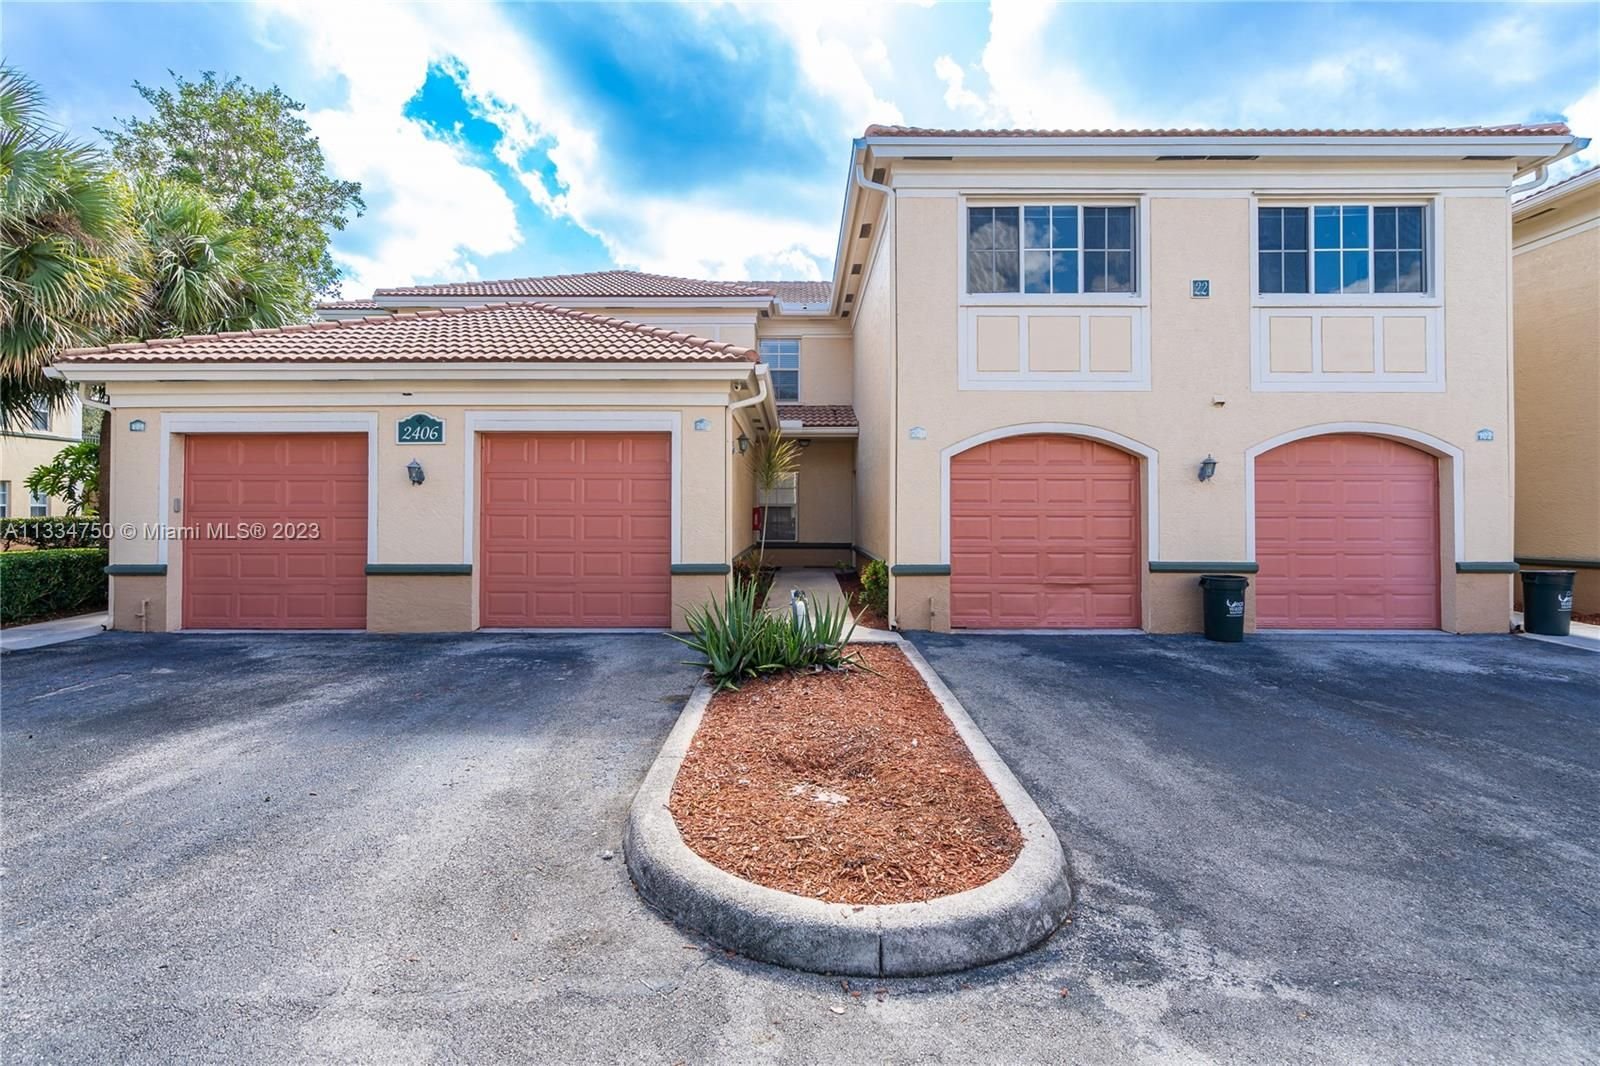 Real estate property located at , Broward County, Miramar, FL